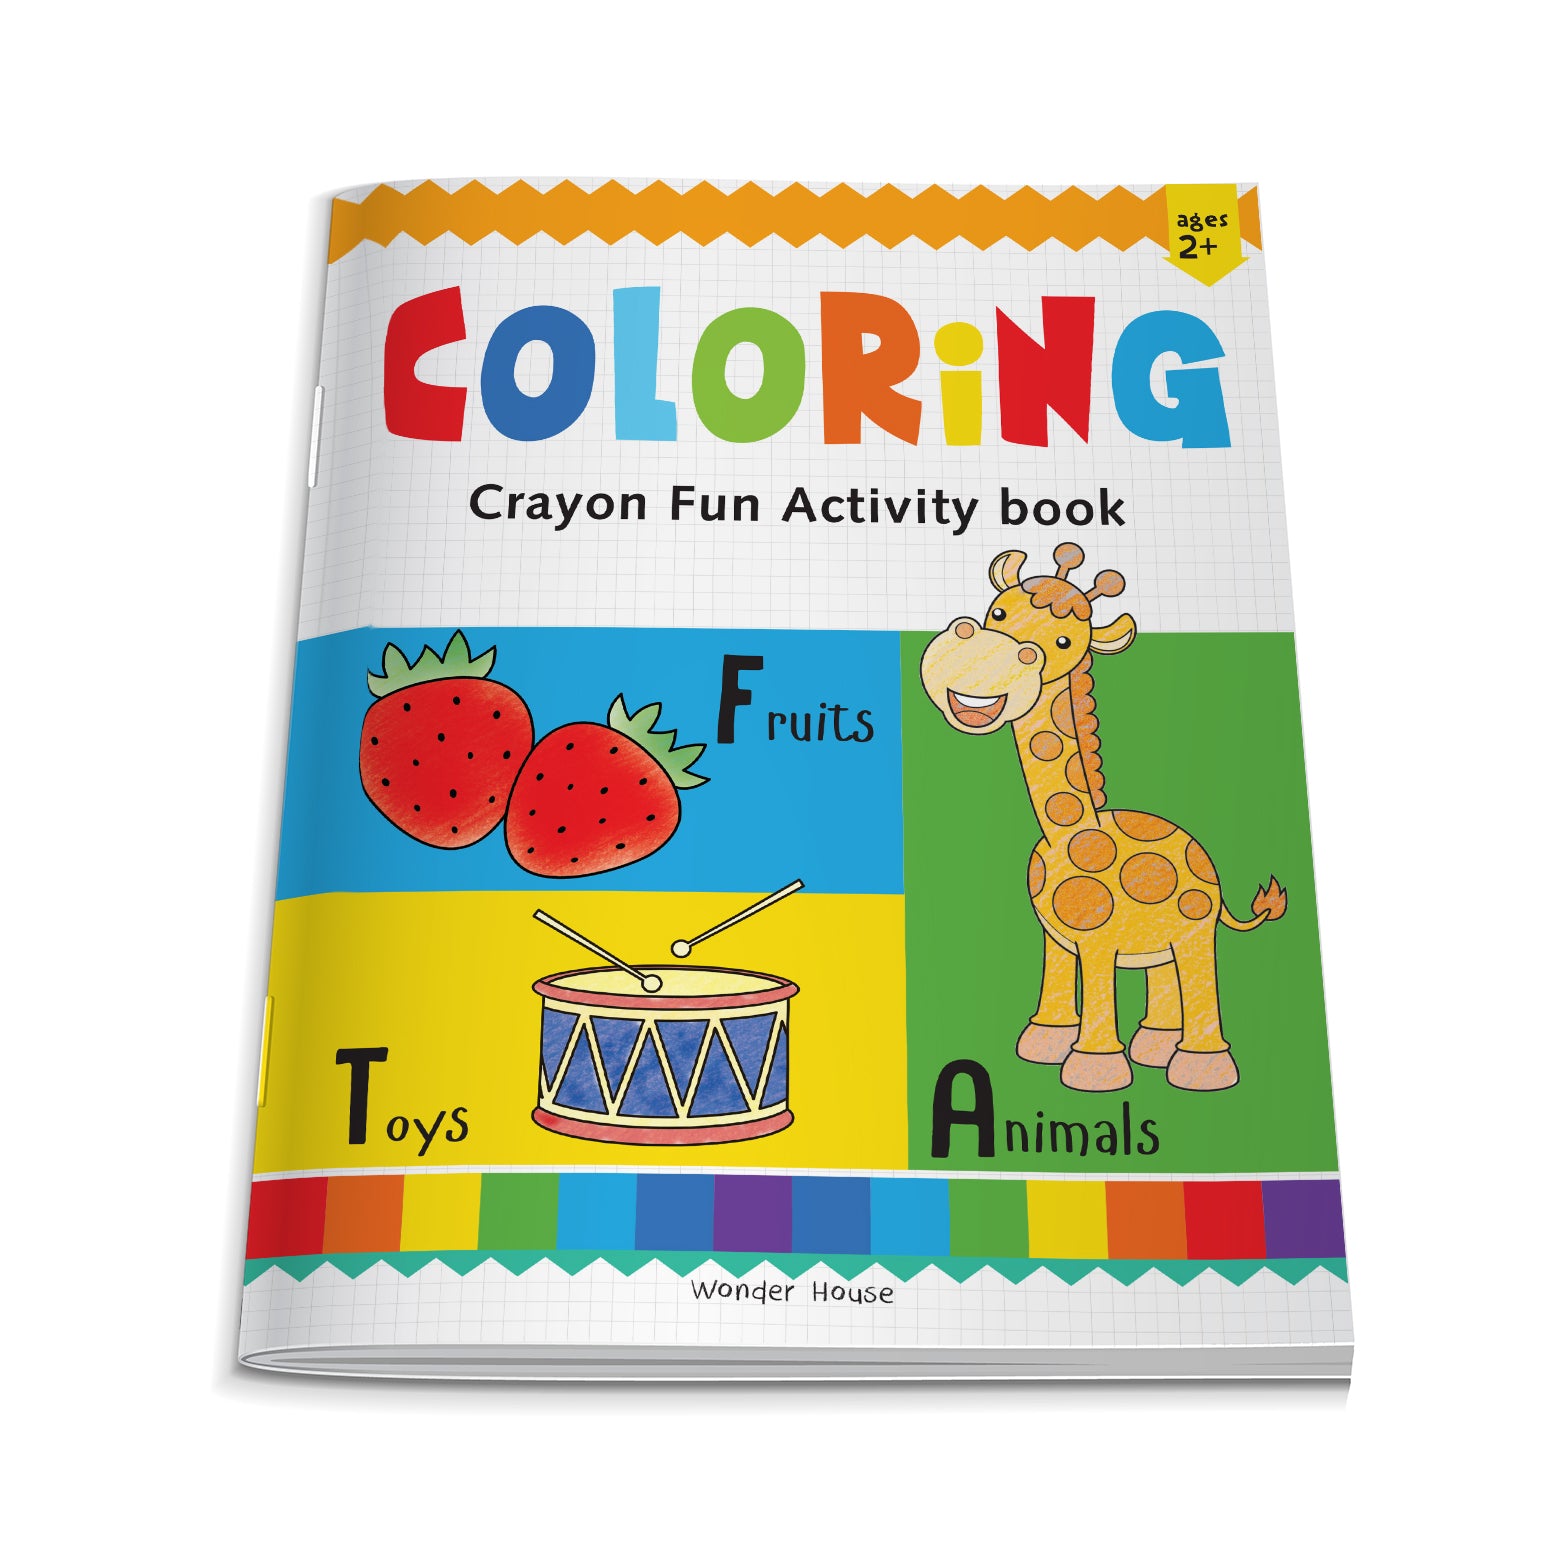 Preschool Activity Book: Coloring - Crayon Fun Activity Book For Kids